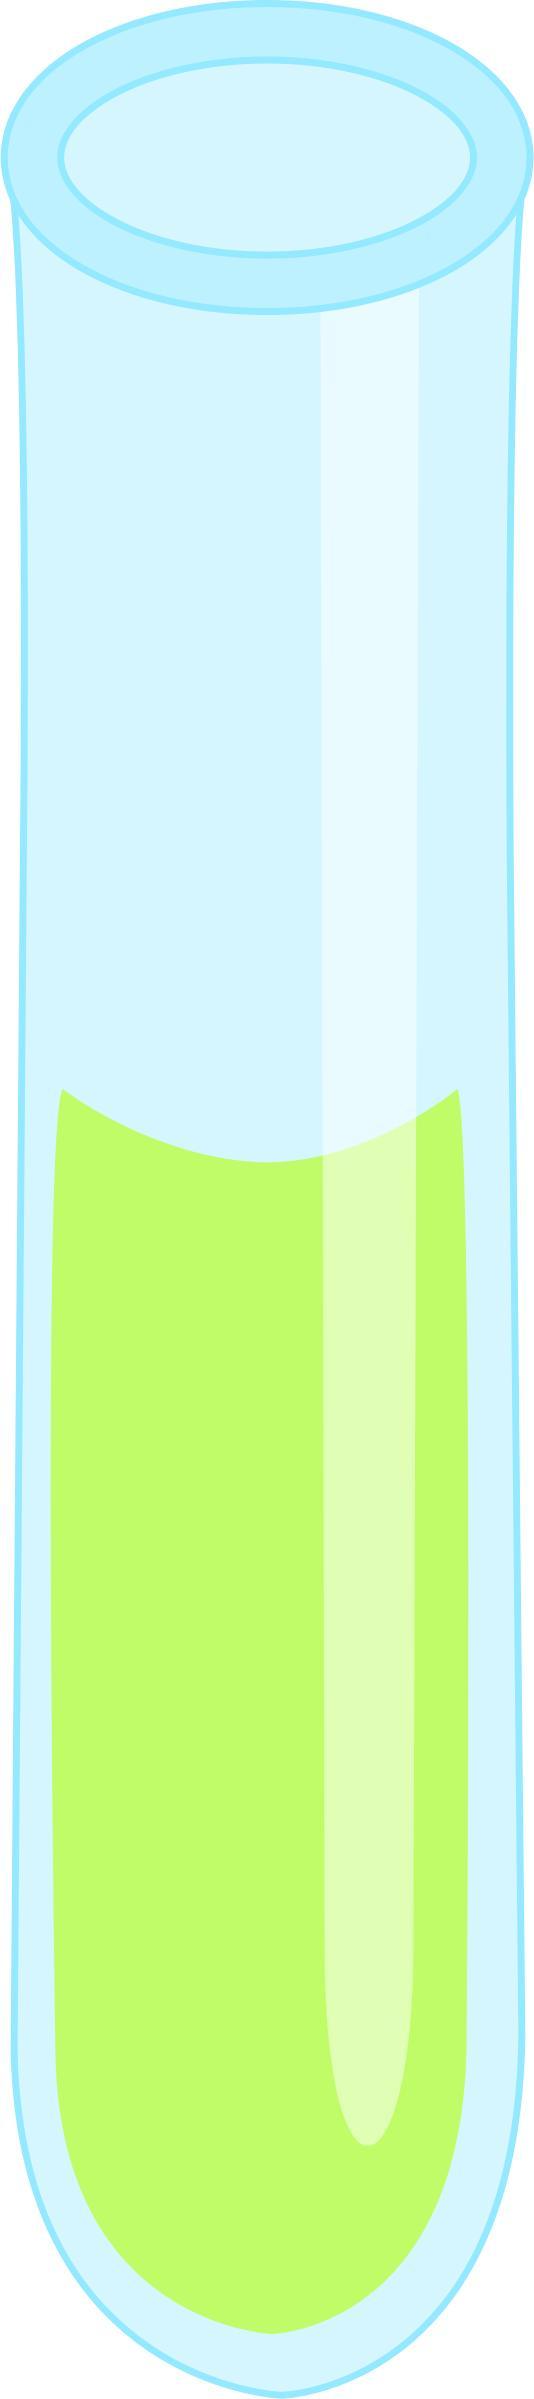 Kawaii test tube with liquid - REMIXED png transparent